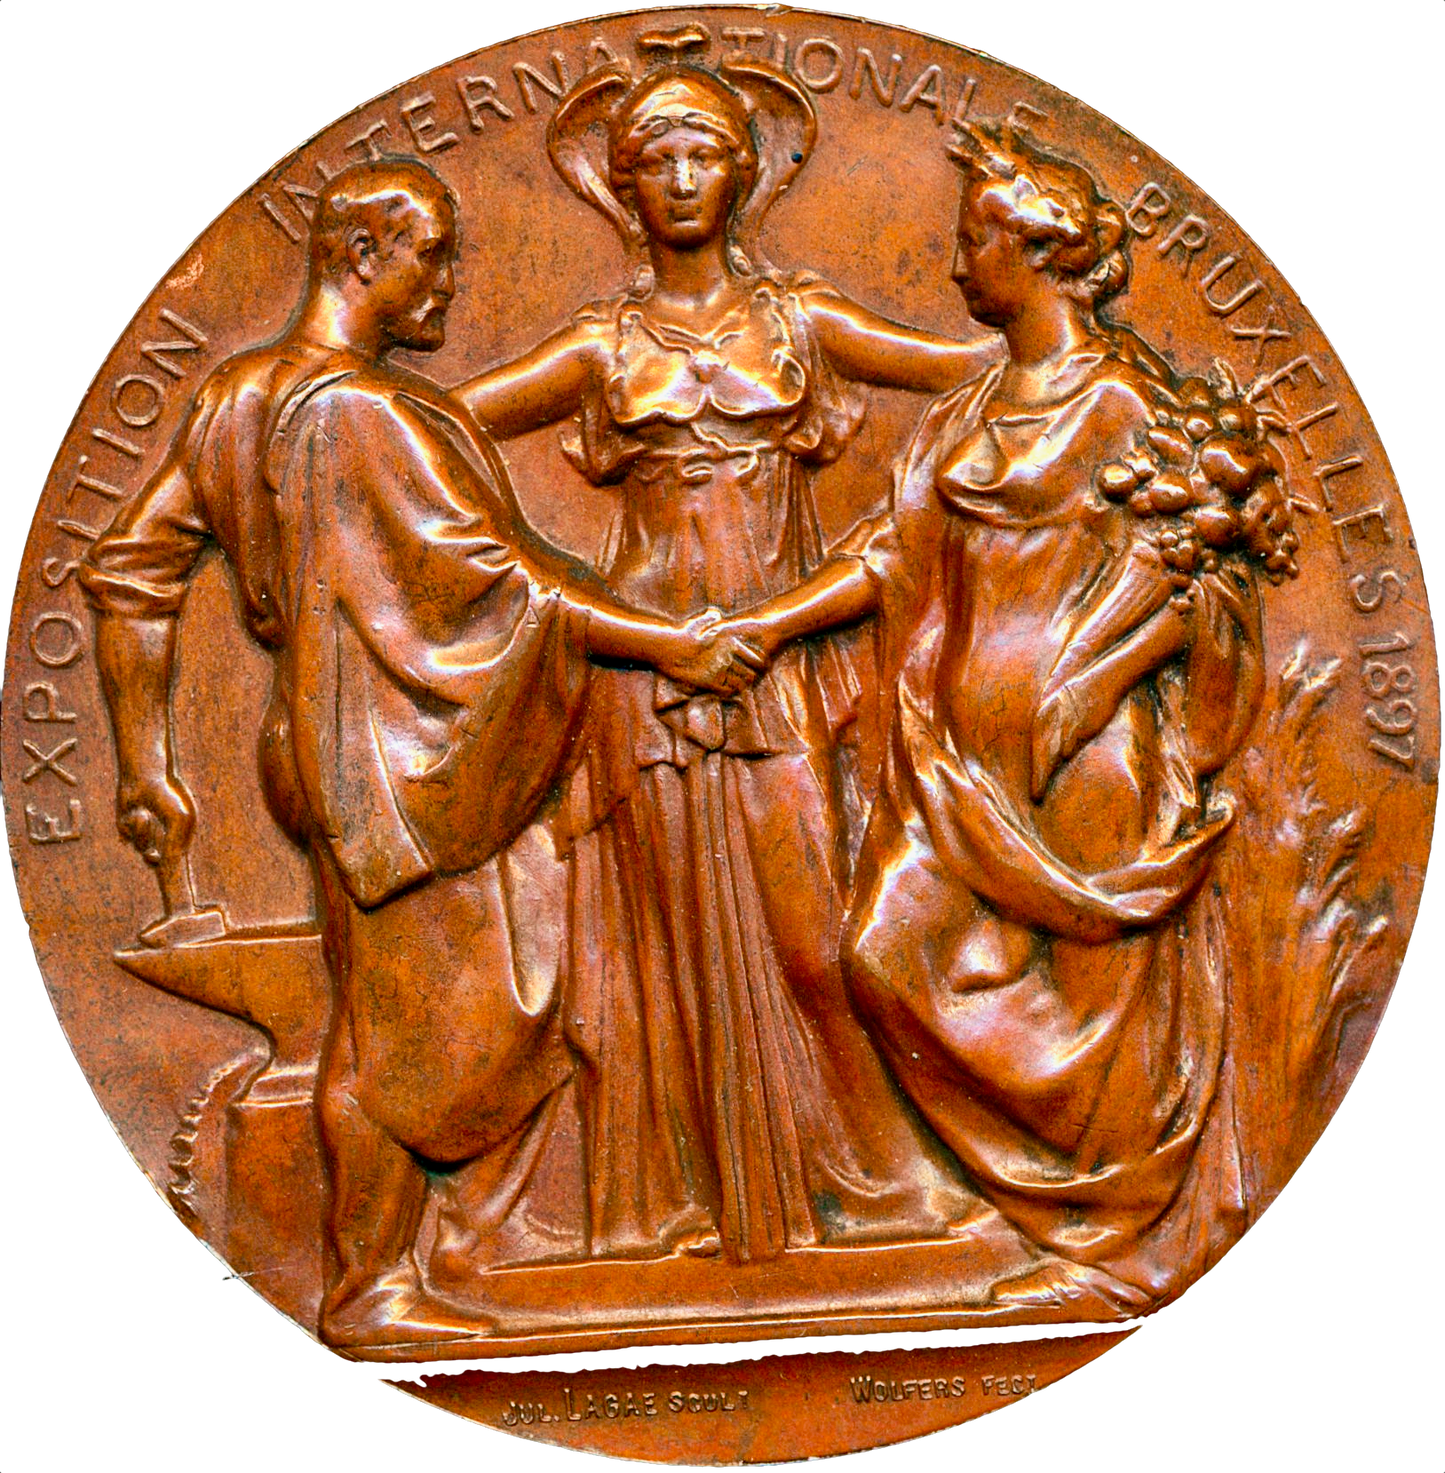 1897 BELGIUM International Exposition 1897, Brussels 69.5mm bronze medal